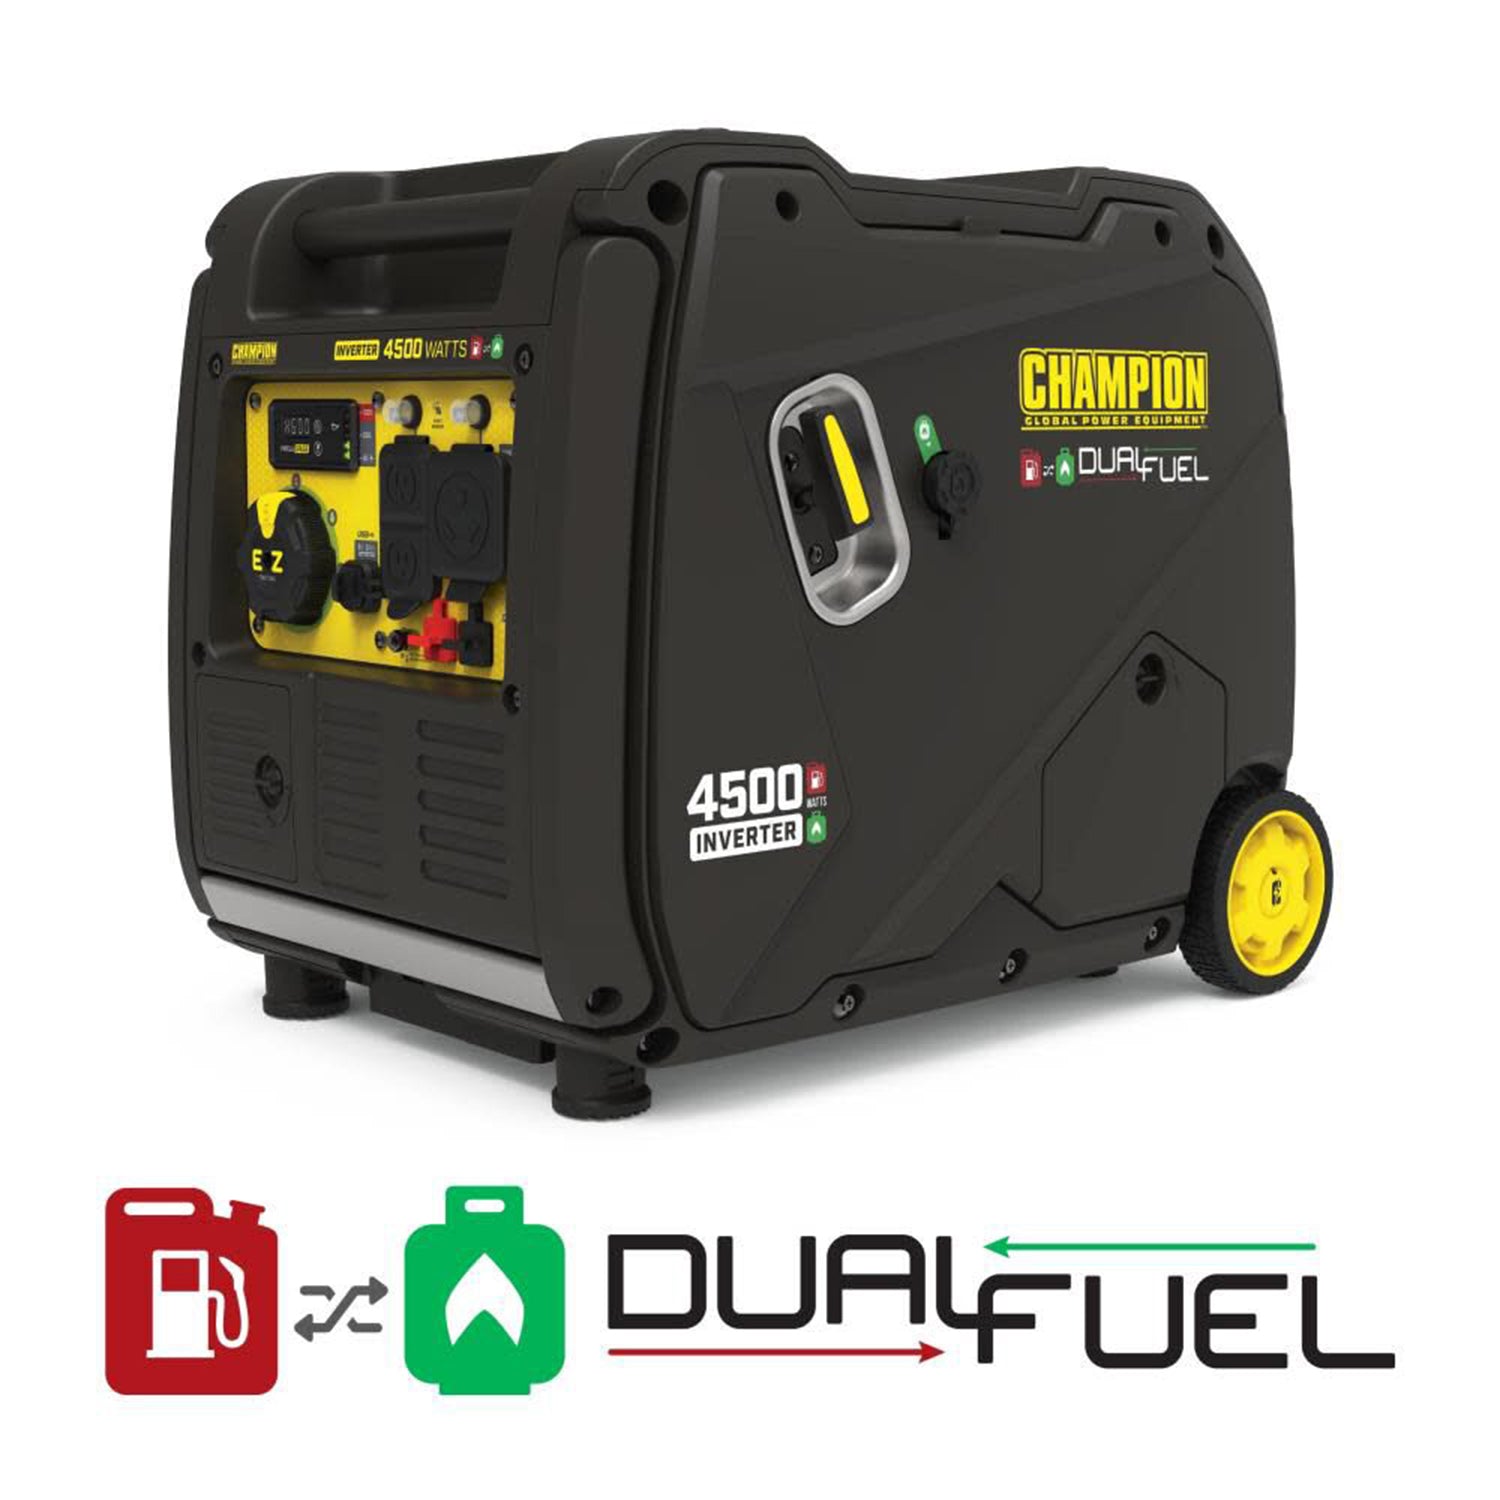 Champion Dual Fuel 4500 Watt Inverter Generator Electric Start Quiet Technology